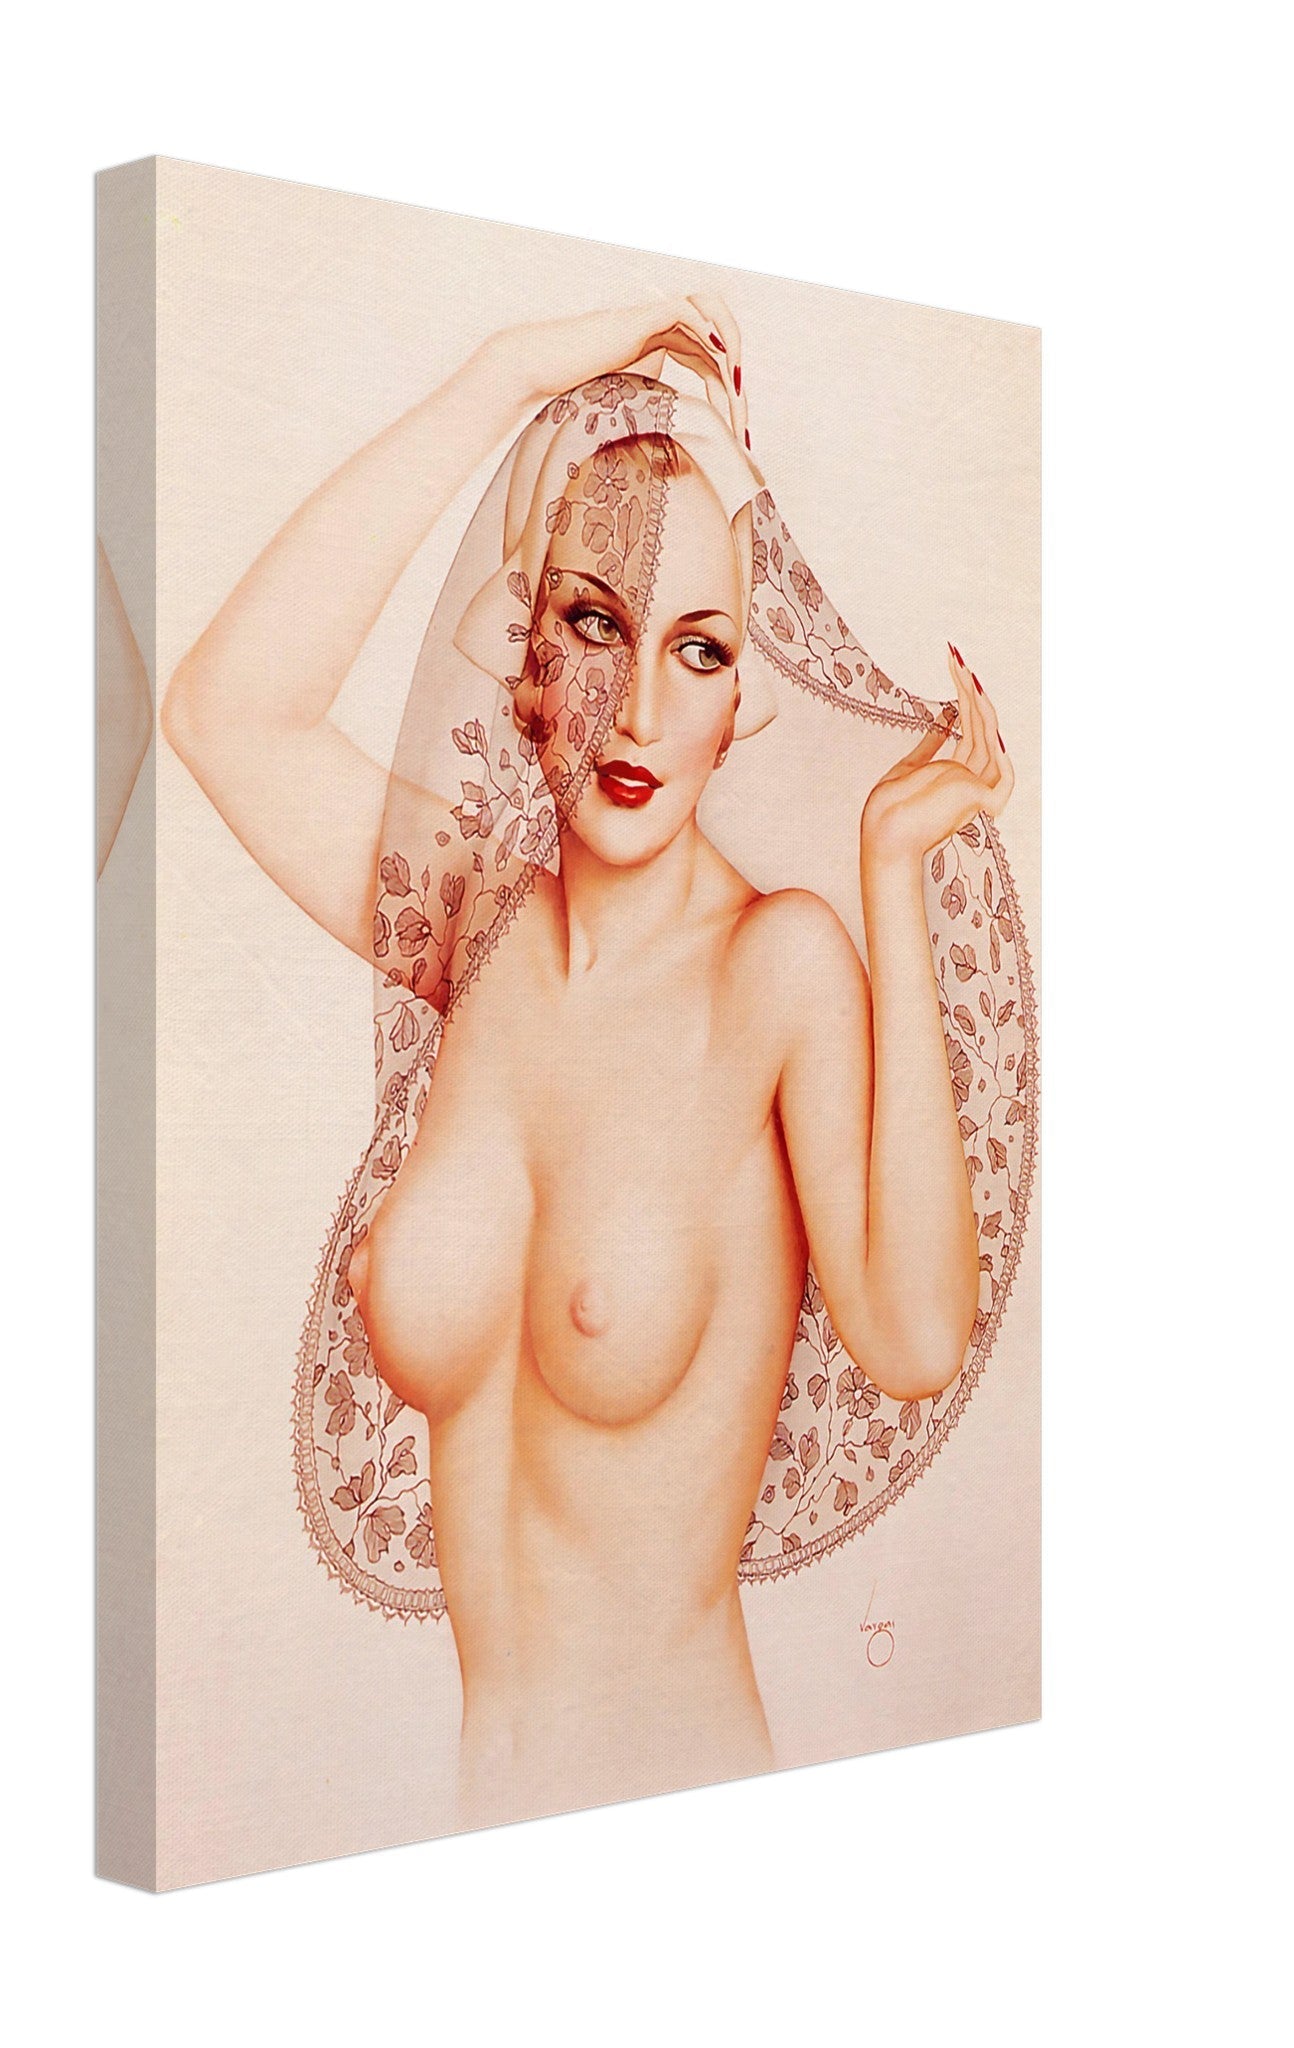 Vintage Pin Up Girl Canvas, Alberto Vargas, Topless Pin Up - Vintage Art - Retro Pin Up Girl Canvas Print - Late 1940's - 1950's - WallArtPrints4U